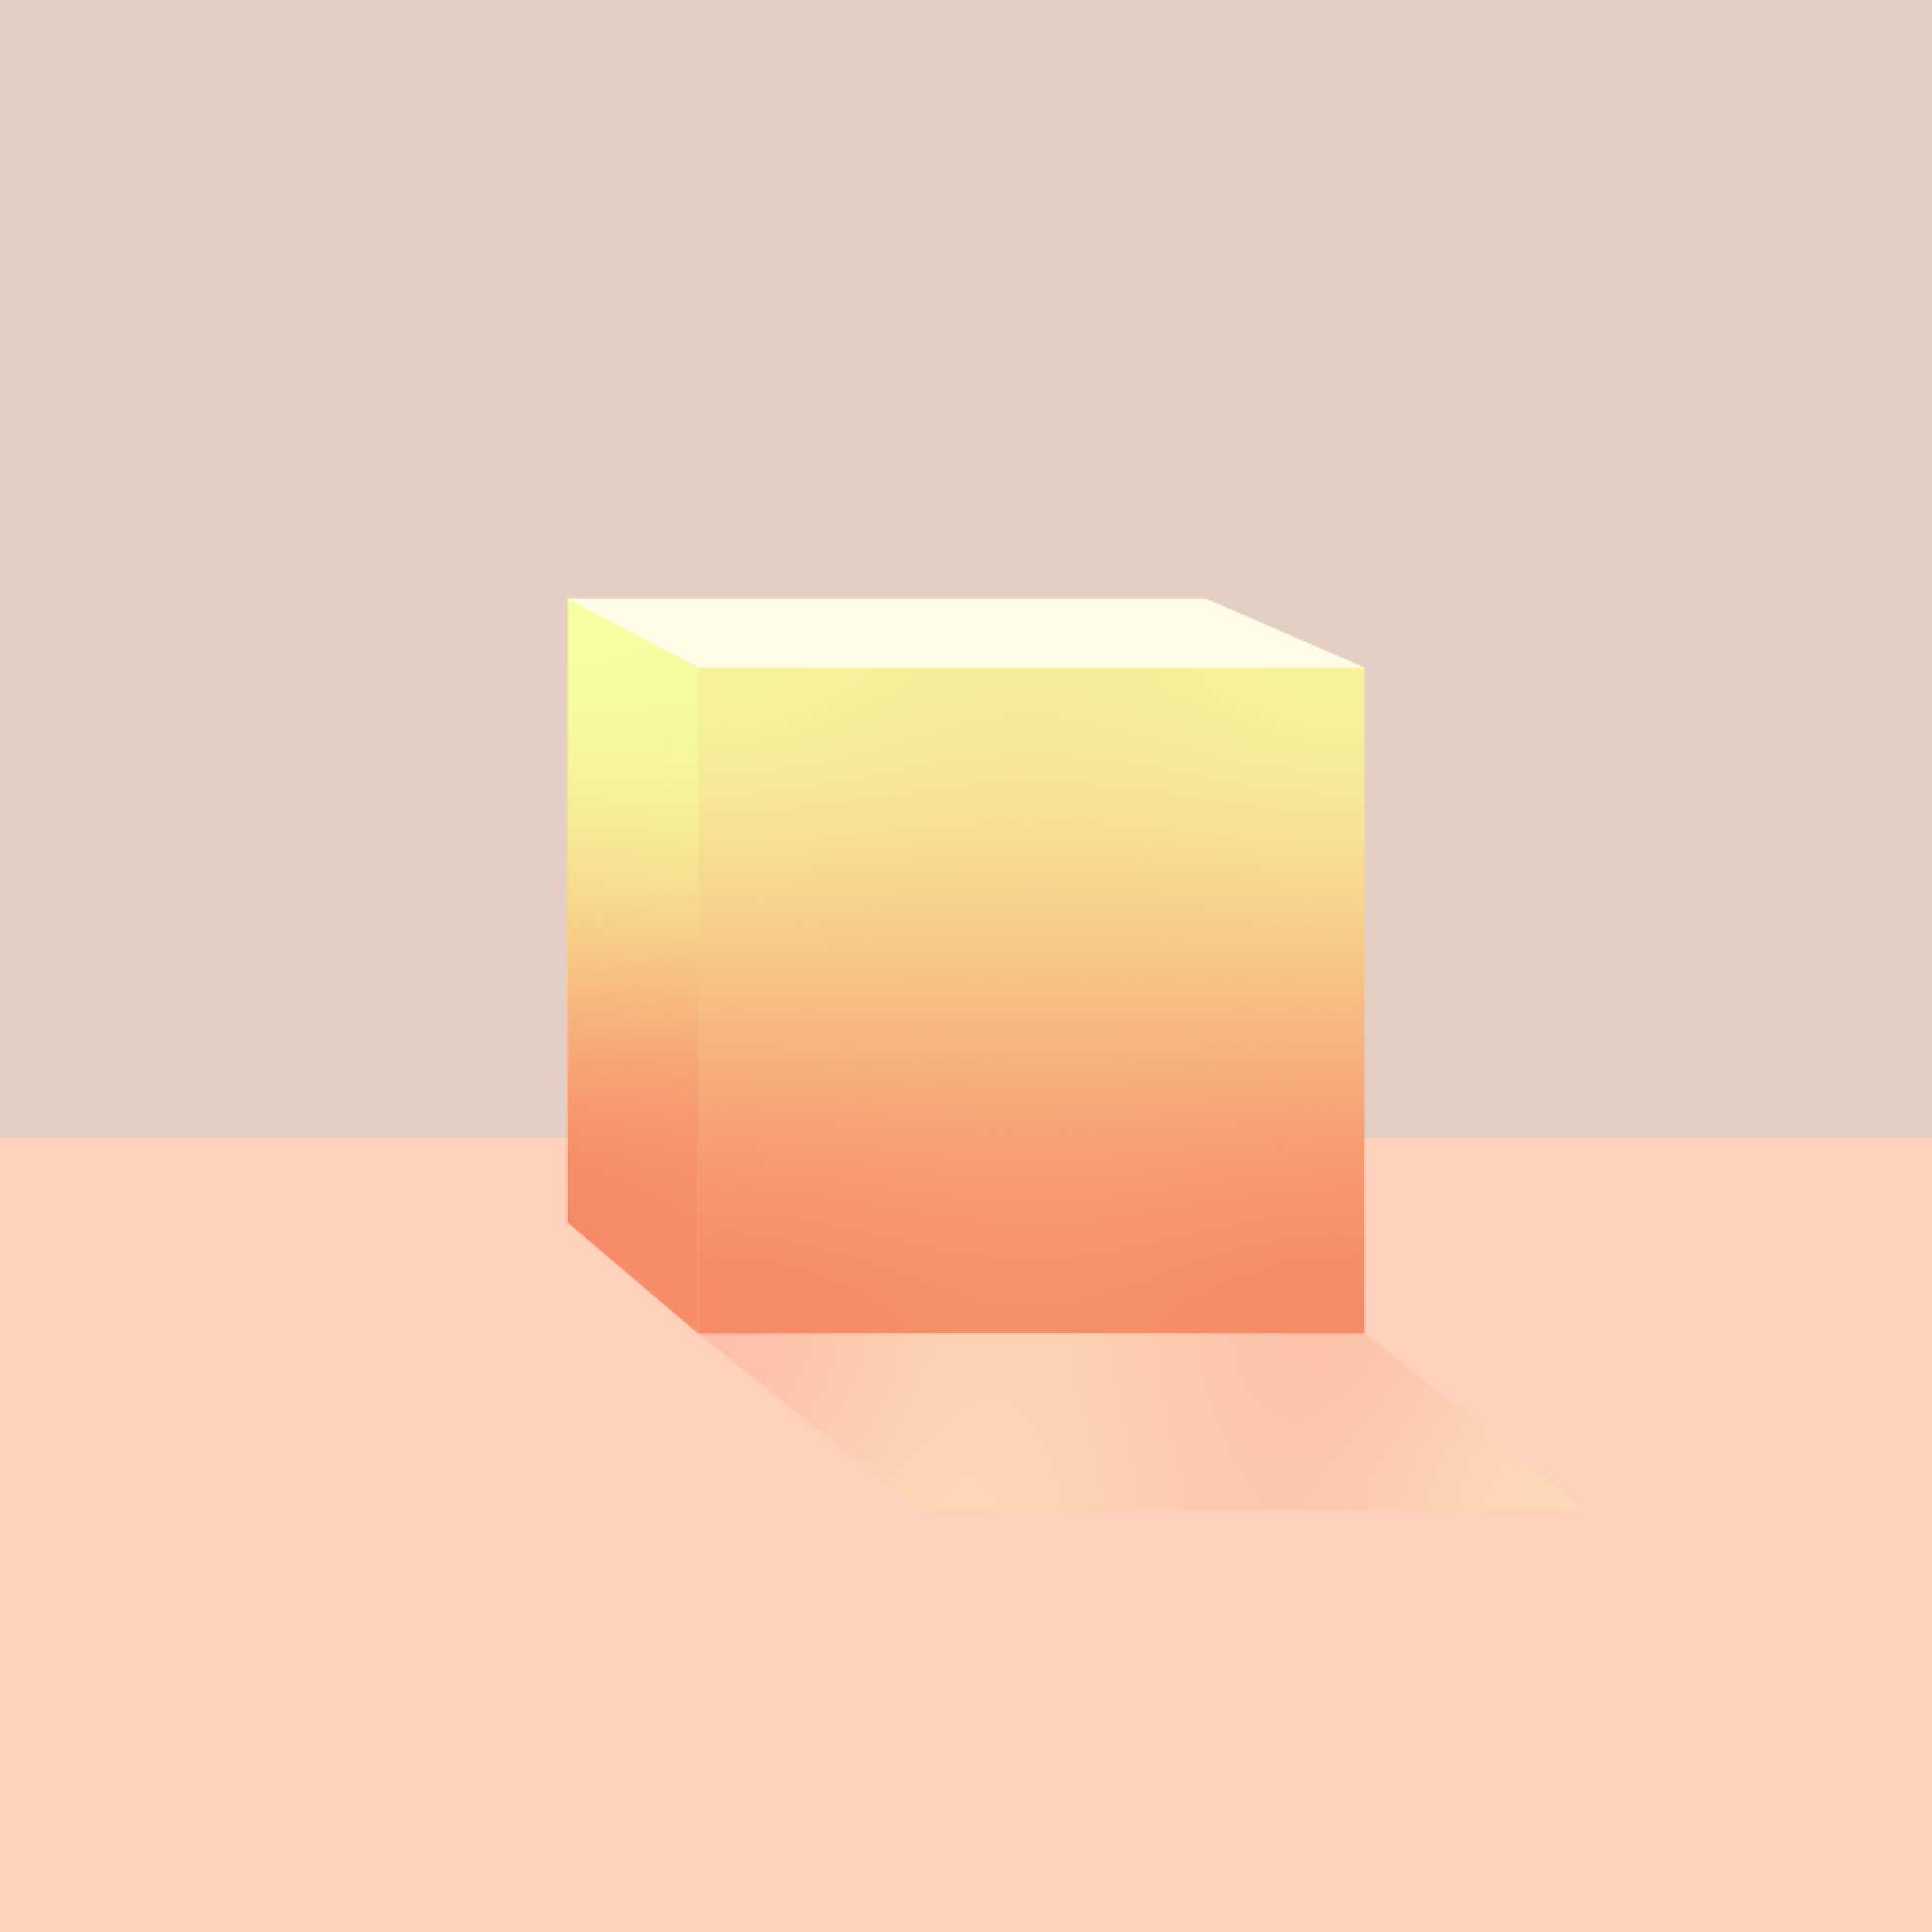 Cube #2